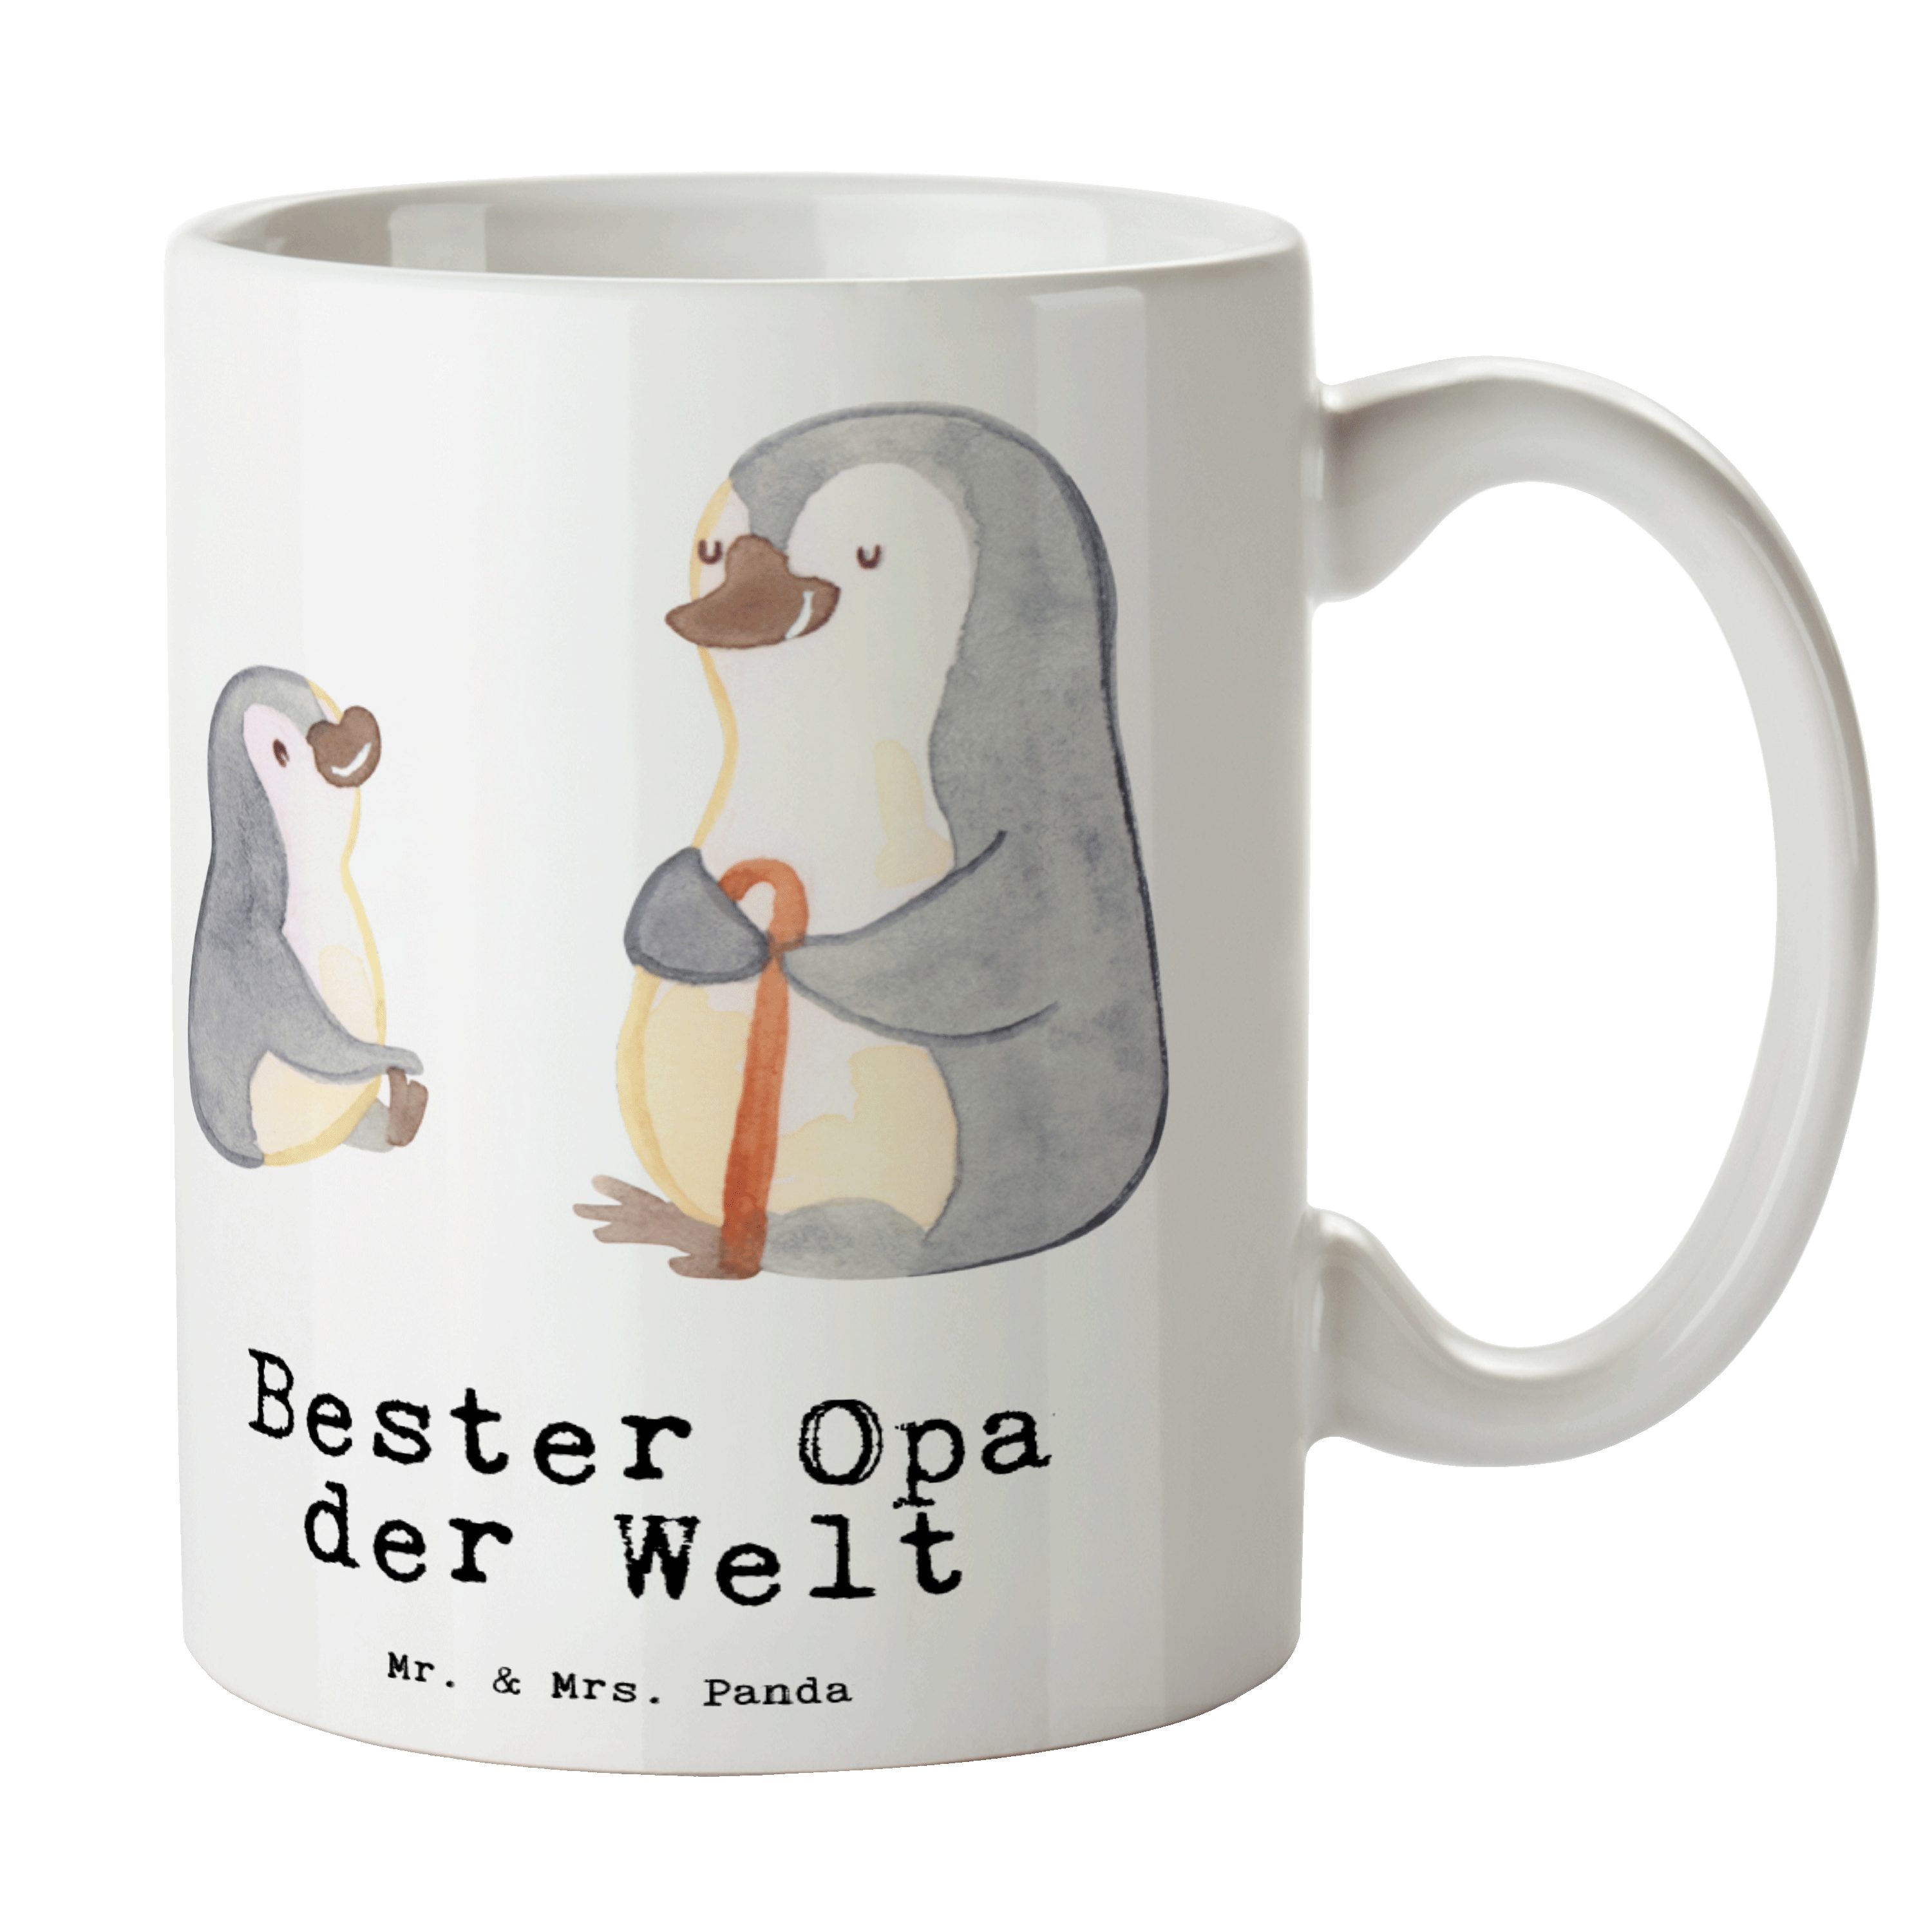 Mr. & Mrs. Panda Tasse Pinguin Bester Opa der Welt - Weiß - Geschenk, Bedanken, Büro, Großvater, Tee, Kaffeebecher, Oppi, für, Kaffeetasse, Geschenkidee, Becher, Schenken, Keramik